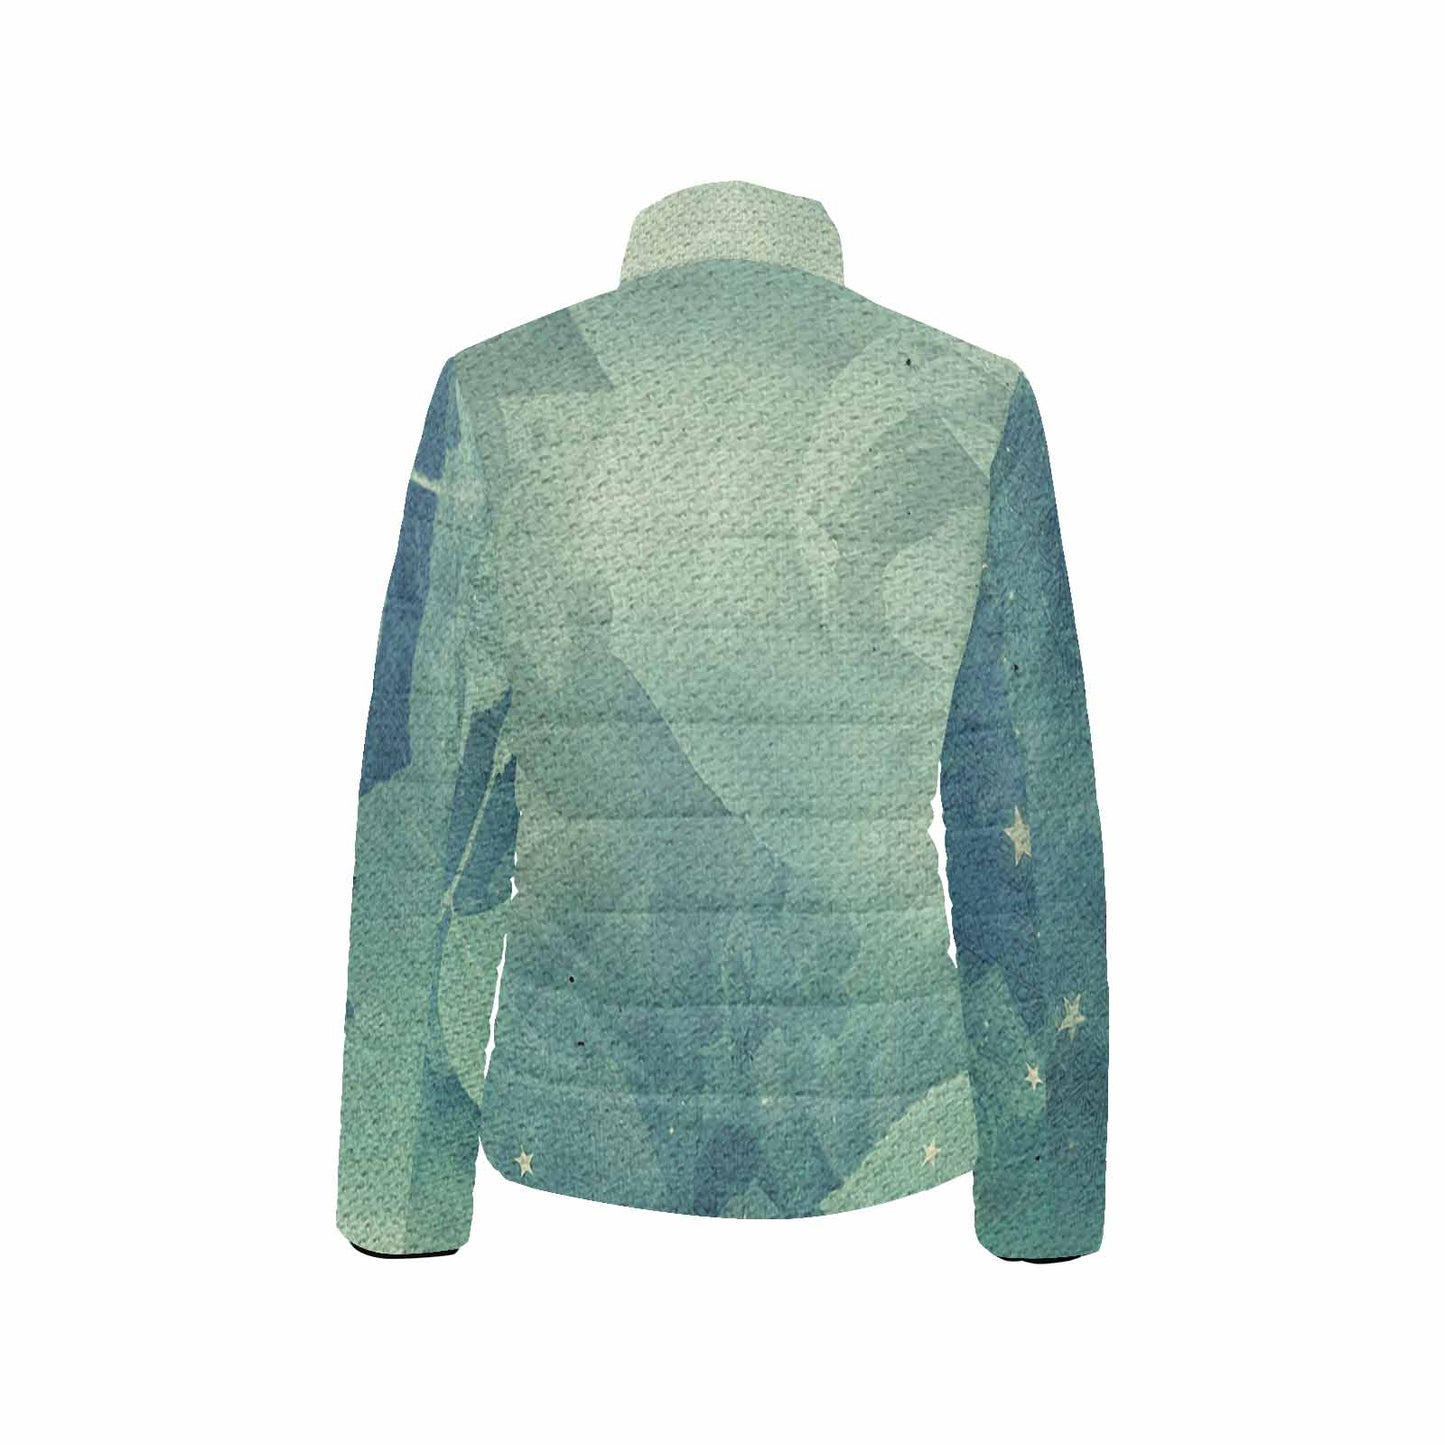 Antique general print quilted jacket, design 53